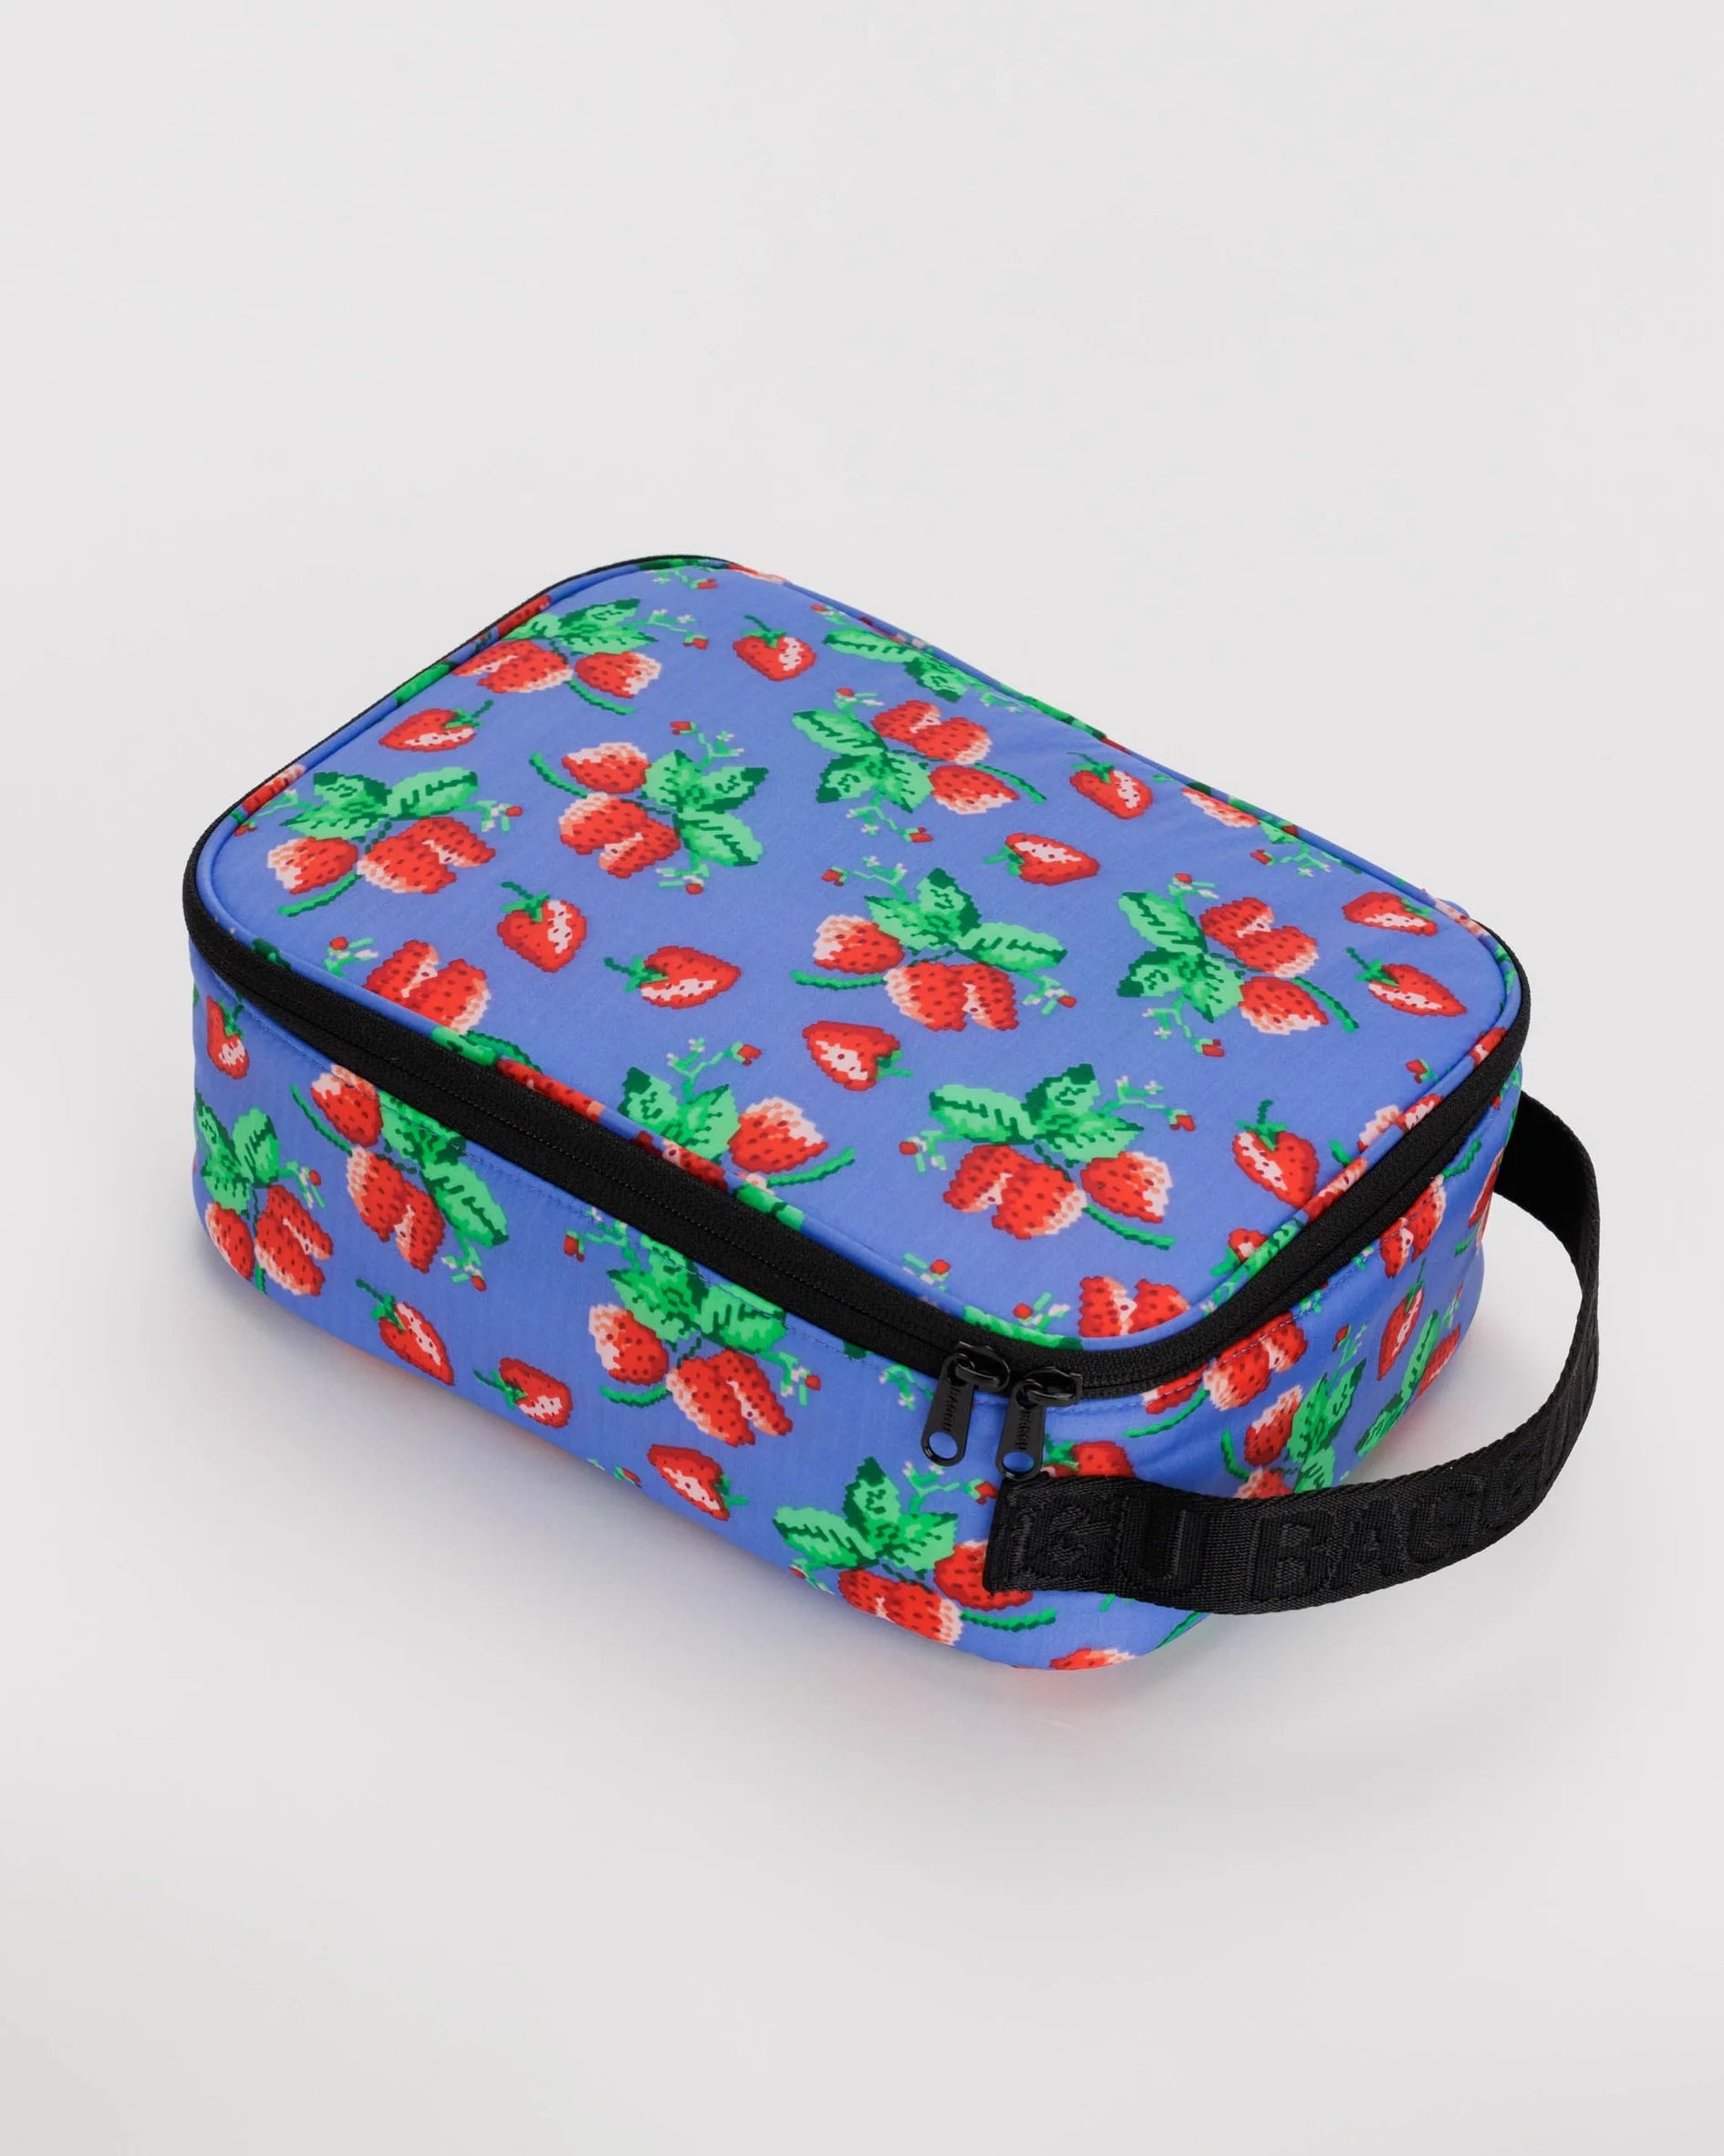 BAGGU Lunch Box in Wild Strawberries